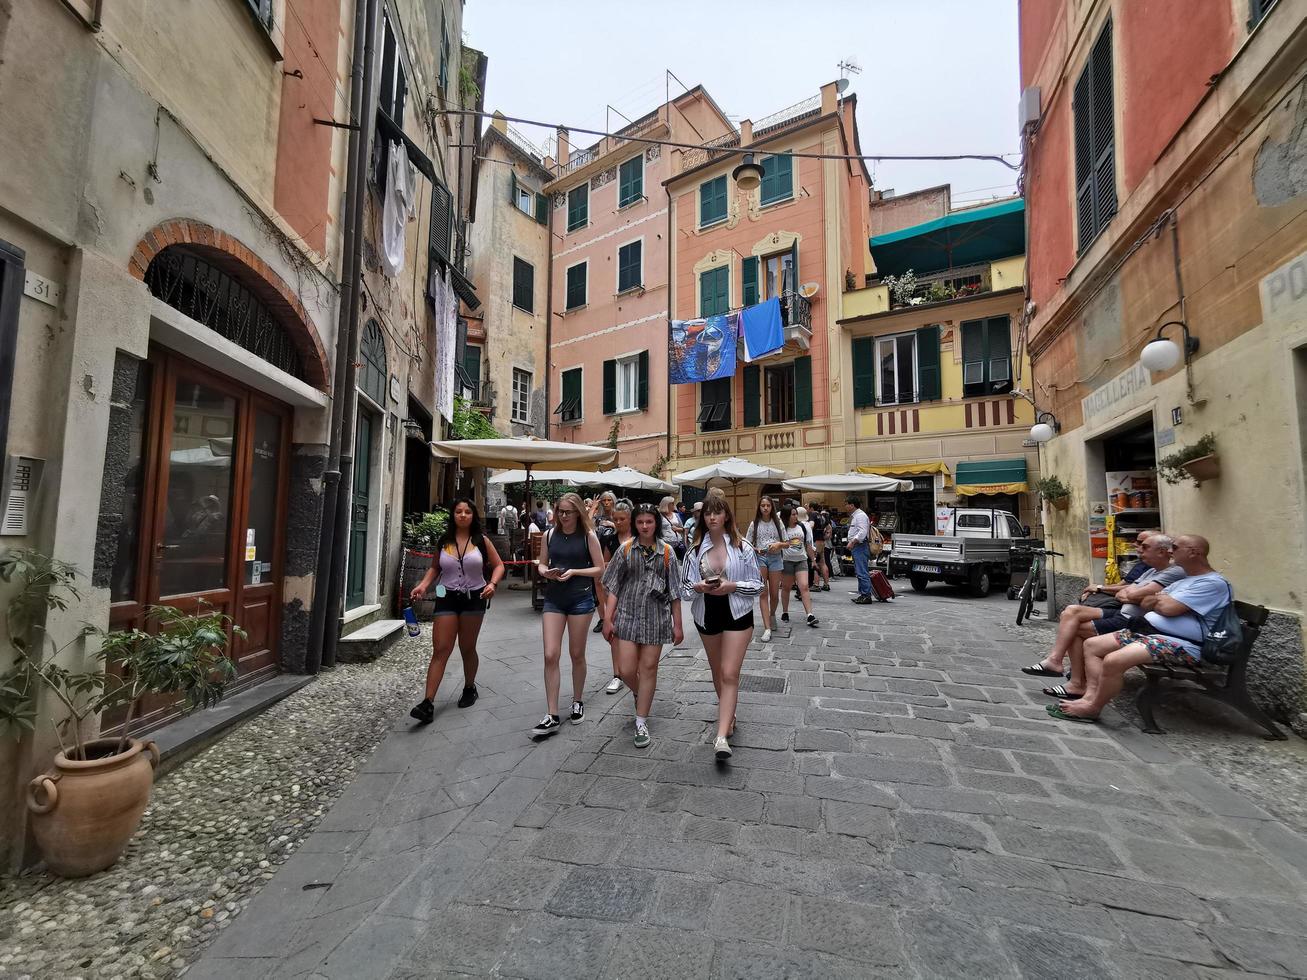 monterosso al mare, italien - 8. juni 2019 - das malerische dorf cinque terre italien ist voller touristen foto